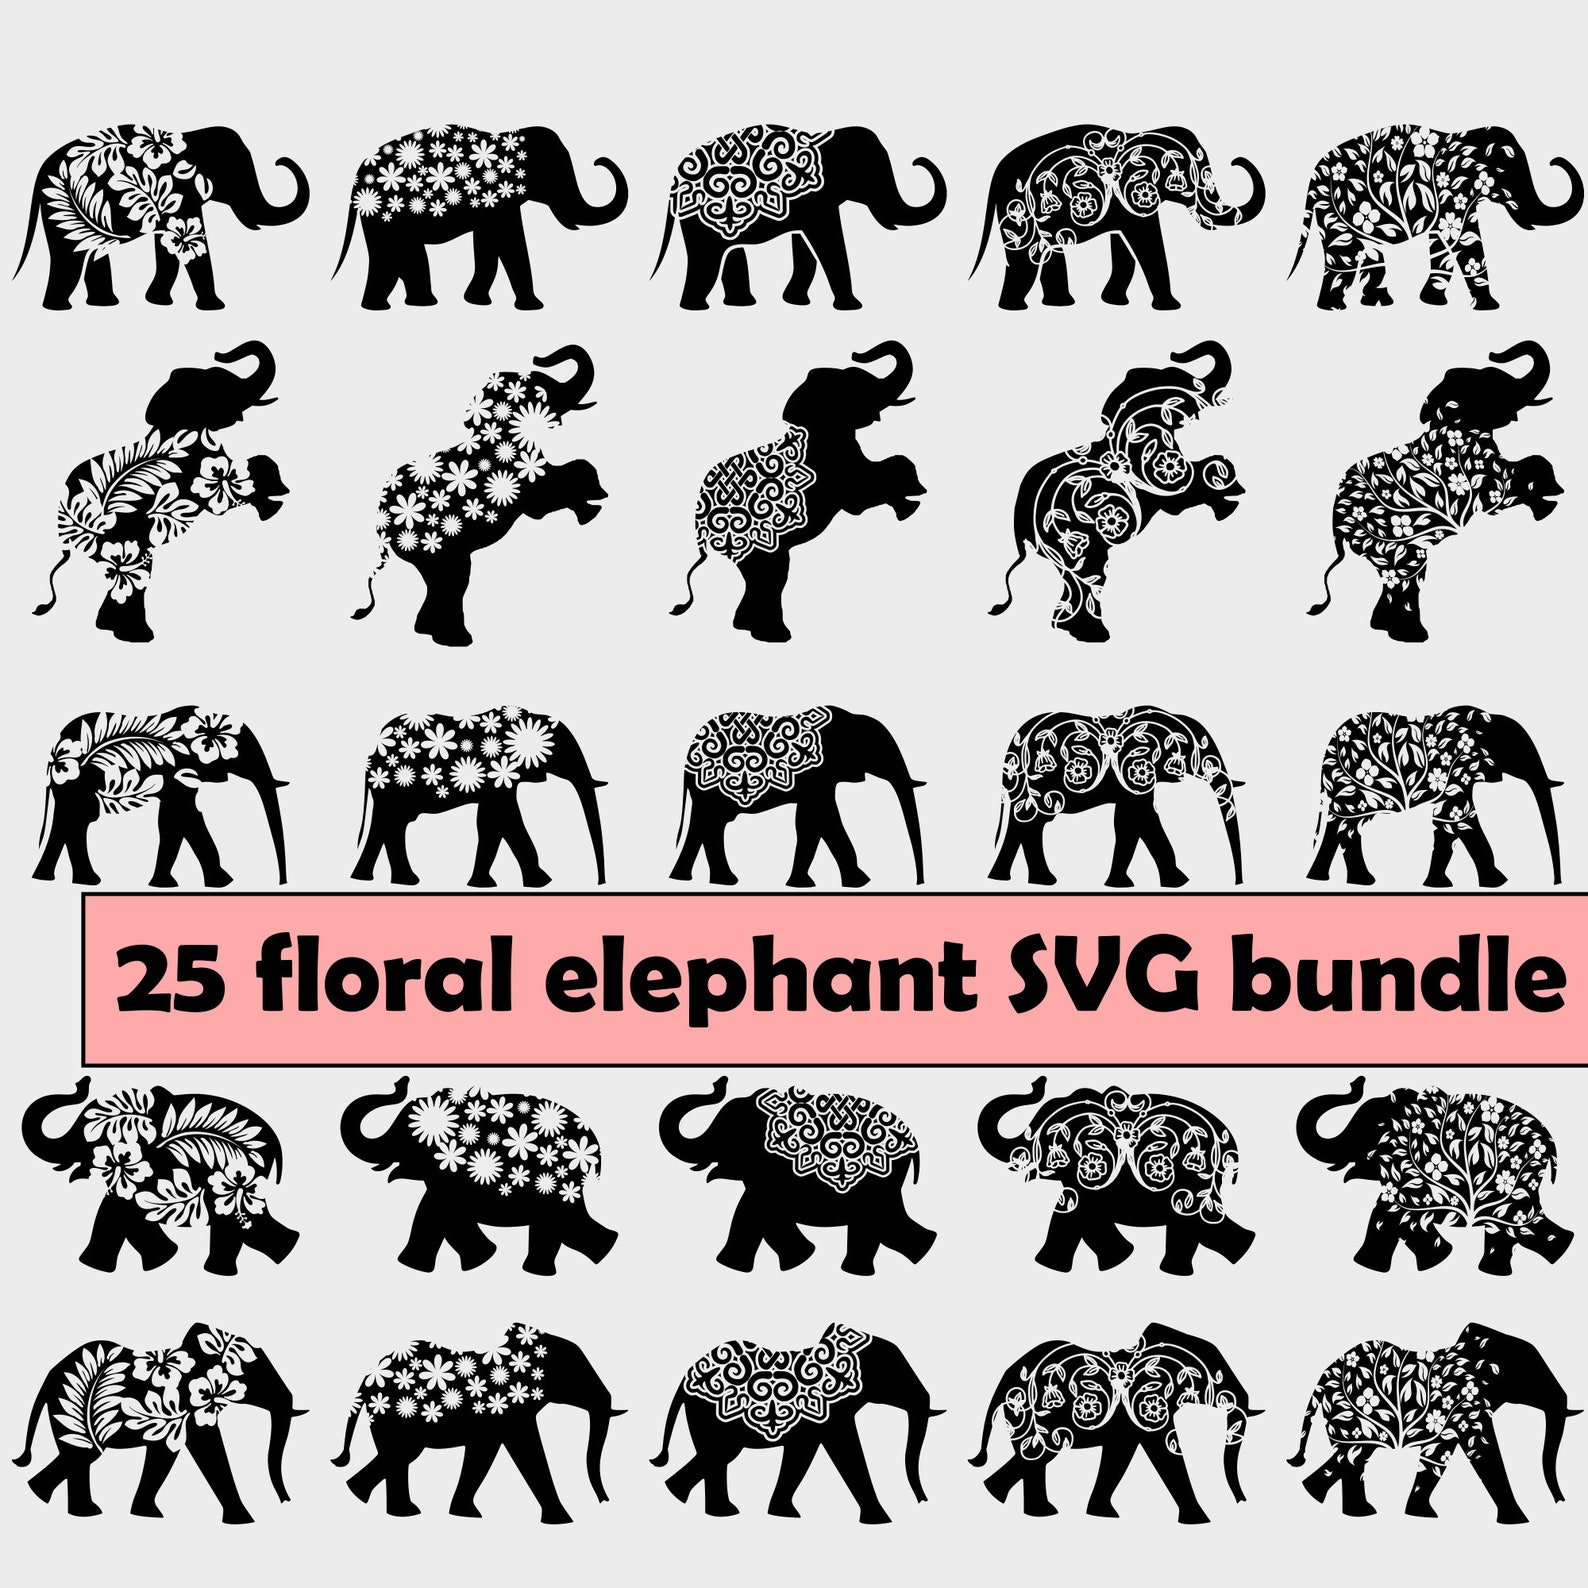 25 floral elephant svg bundle.